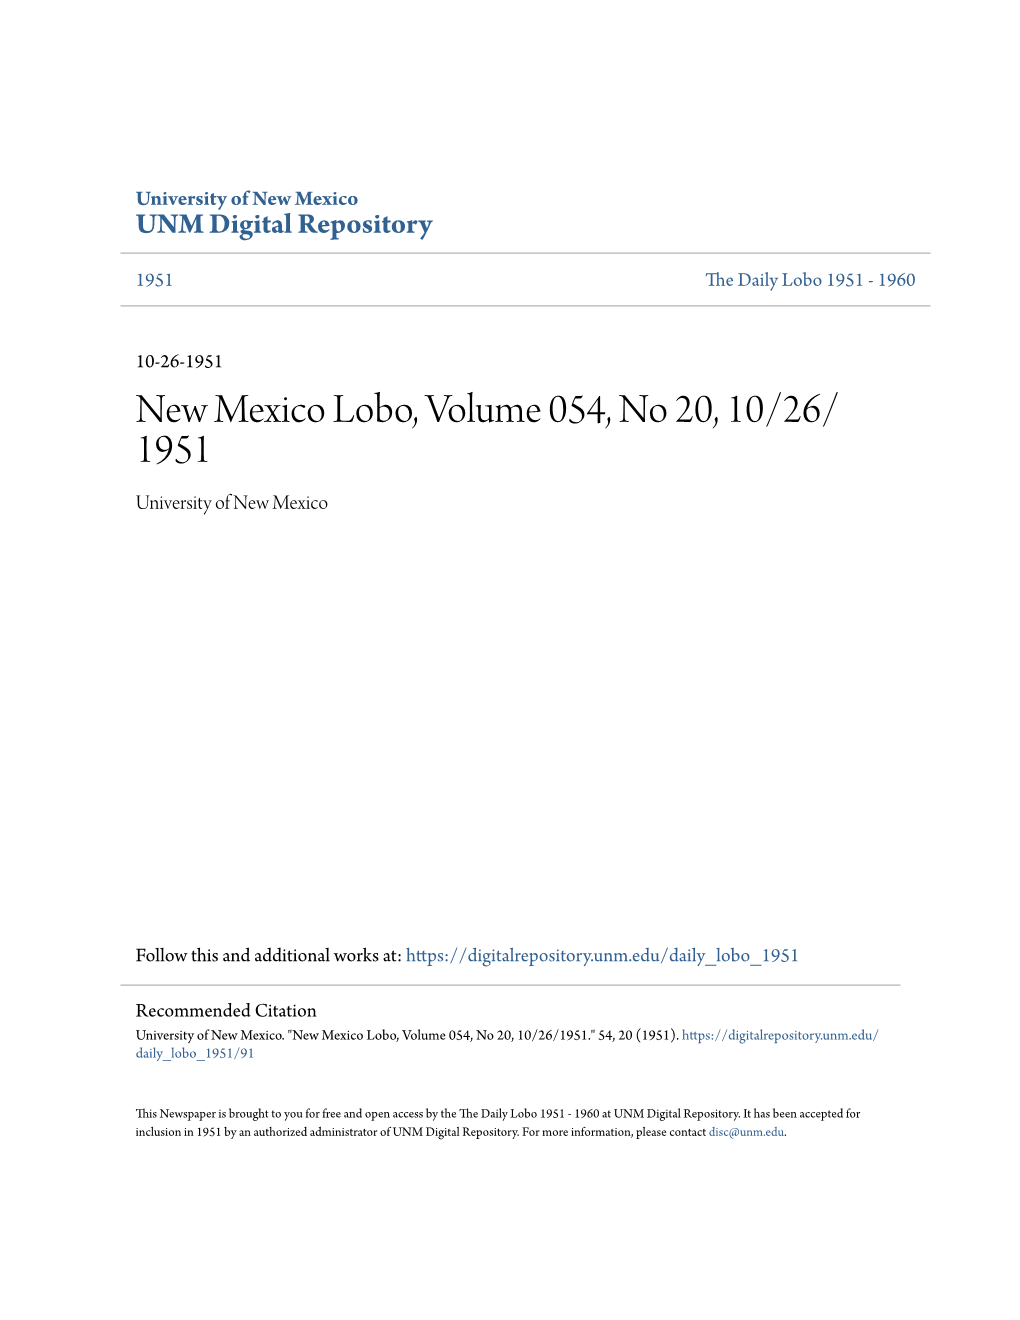 New Mexico Lobo, Volume 054, No 20, 10/26/1951." 54, 20 (1951)